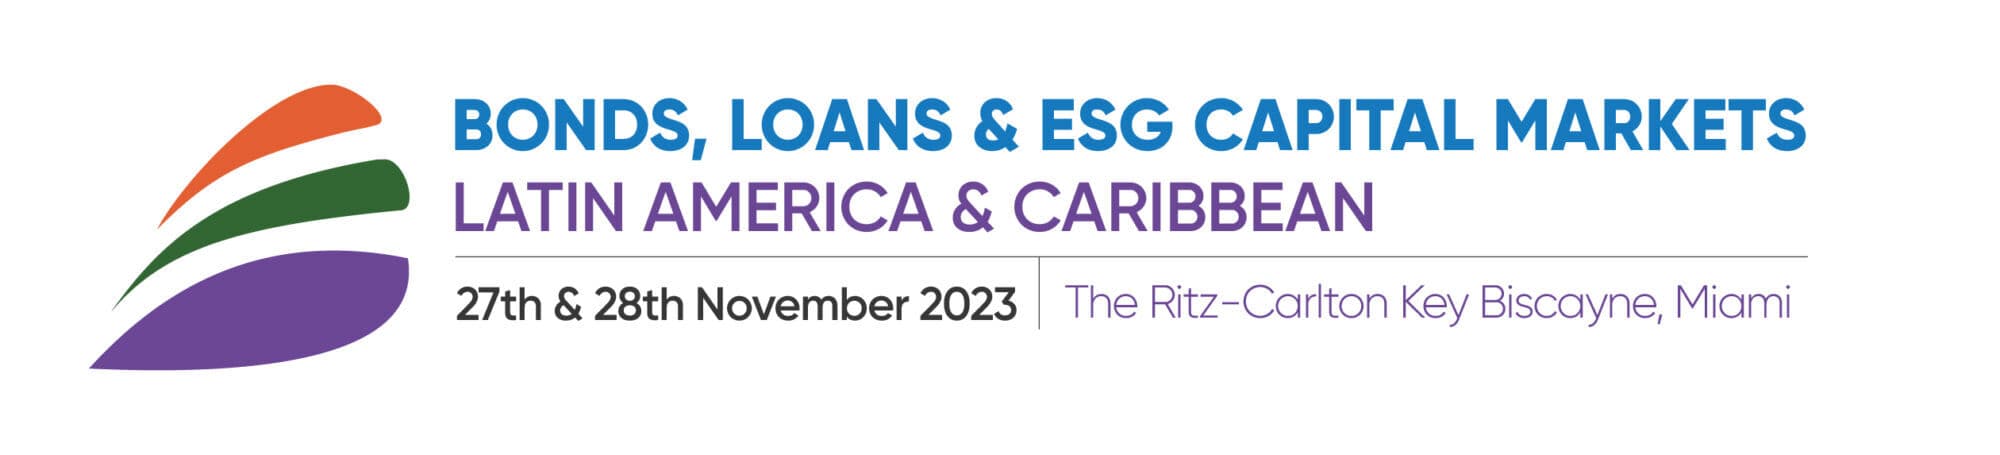 Bonds, Loans & ESG Capital Markets Latin America & Caribbean 2023